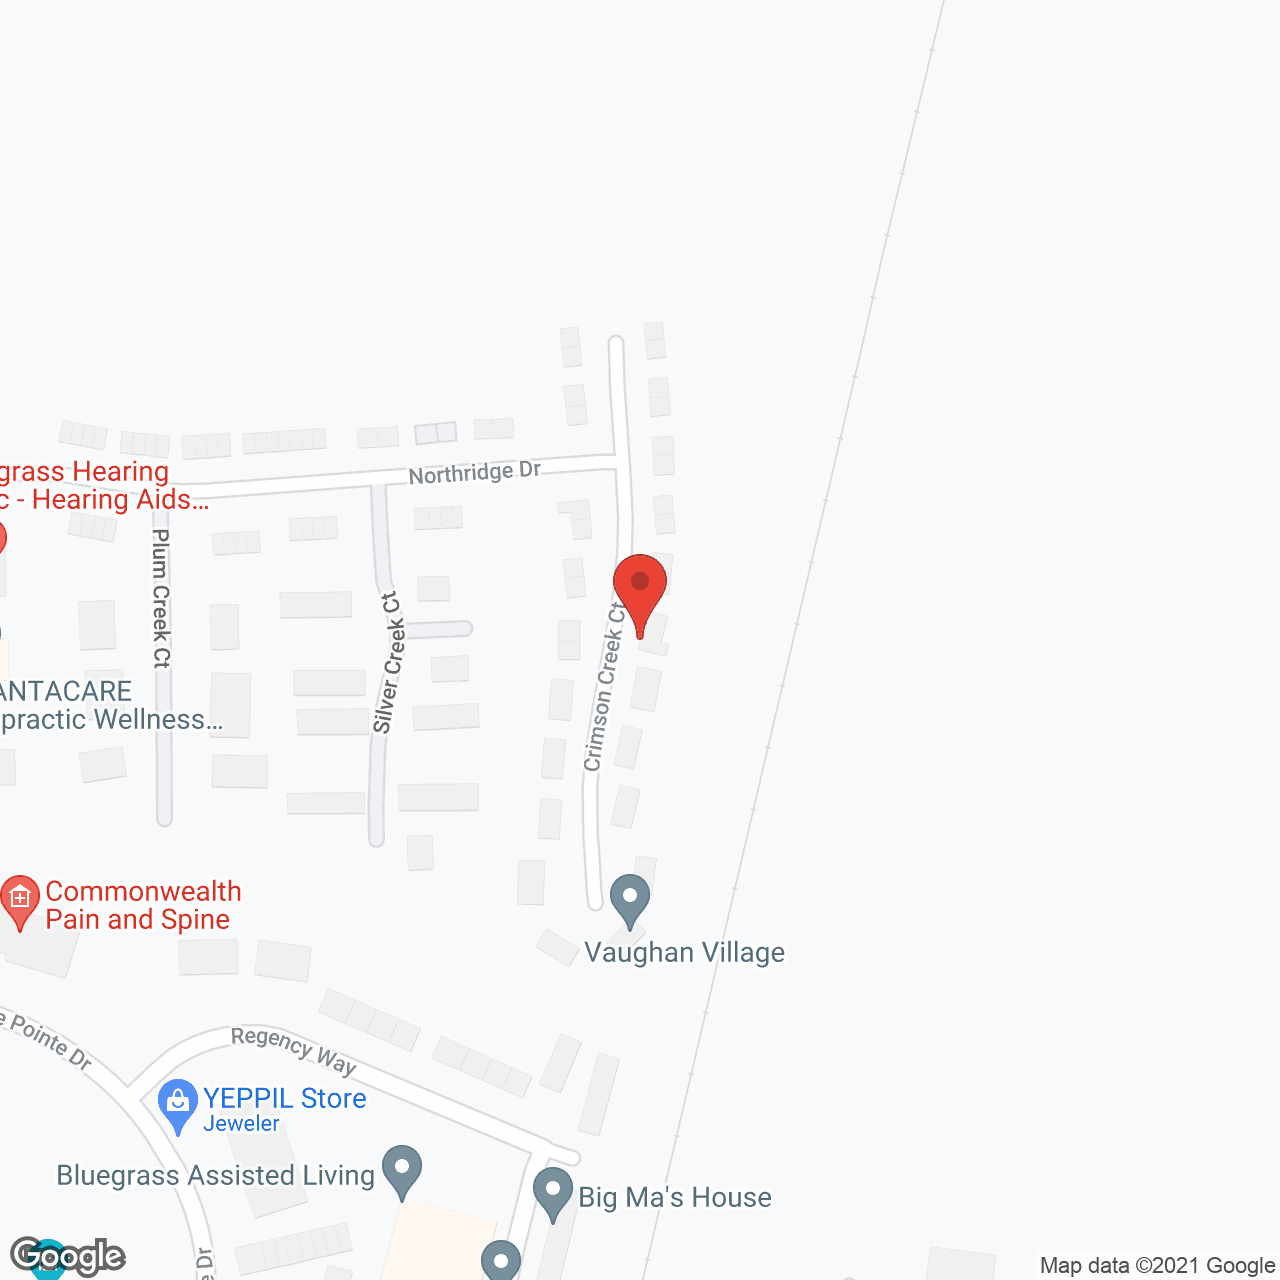 Vaughan Village in google map